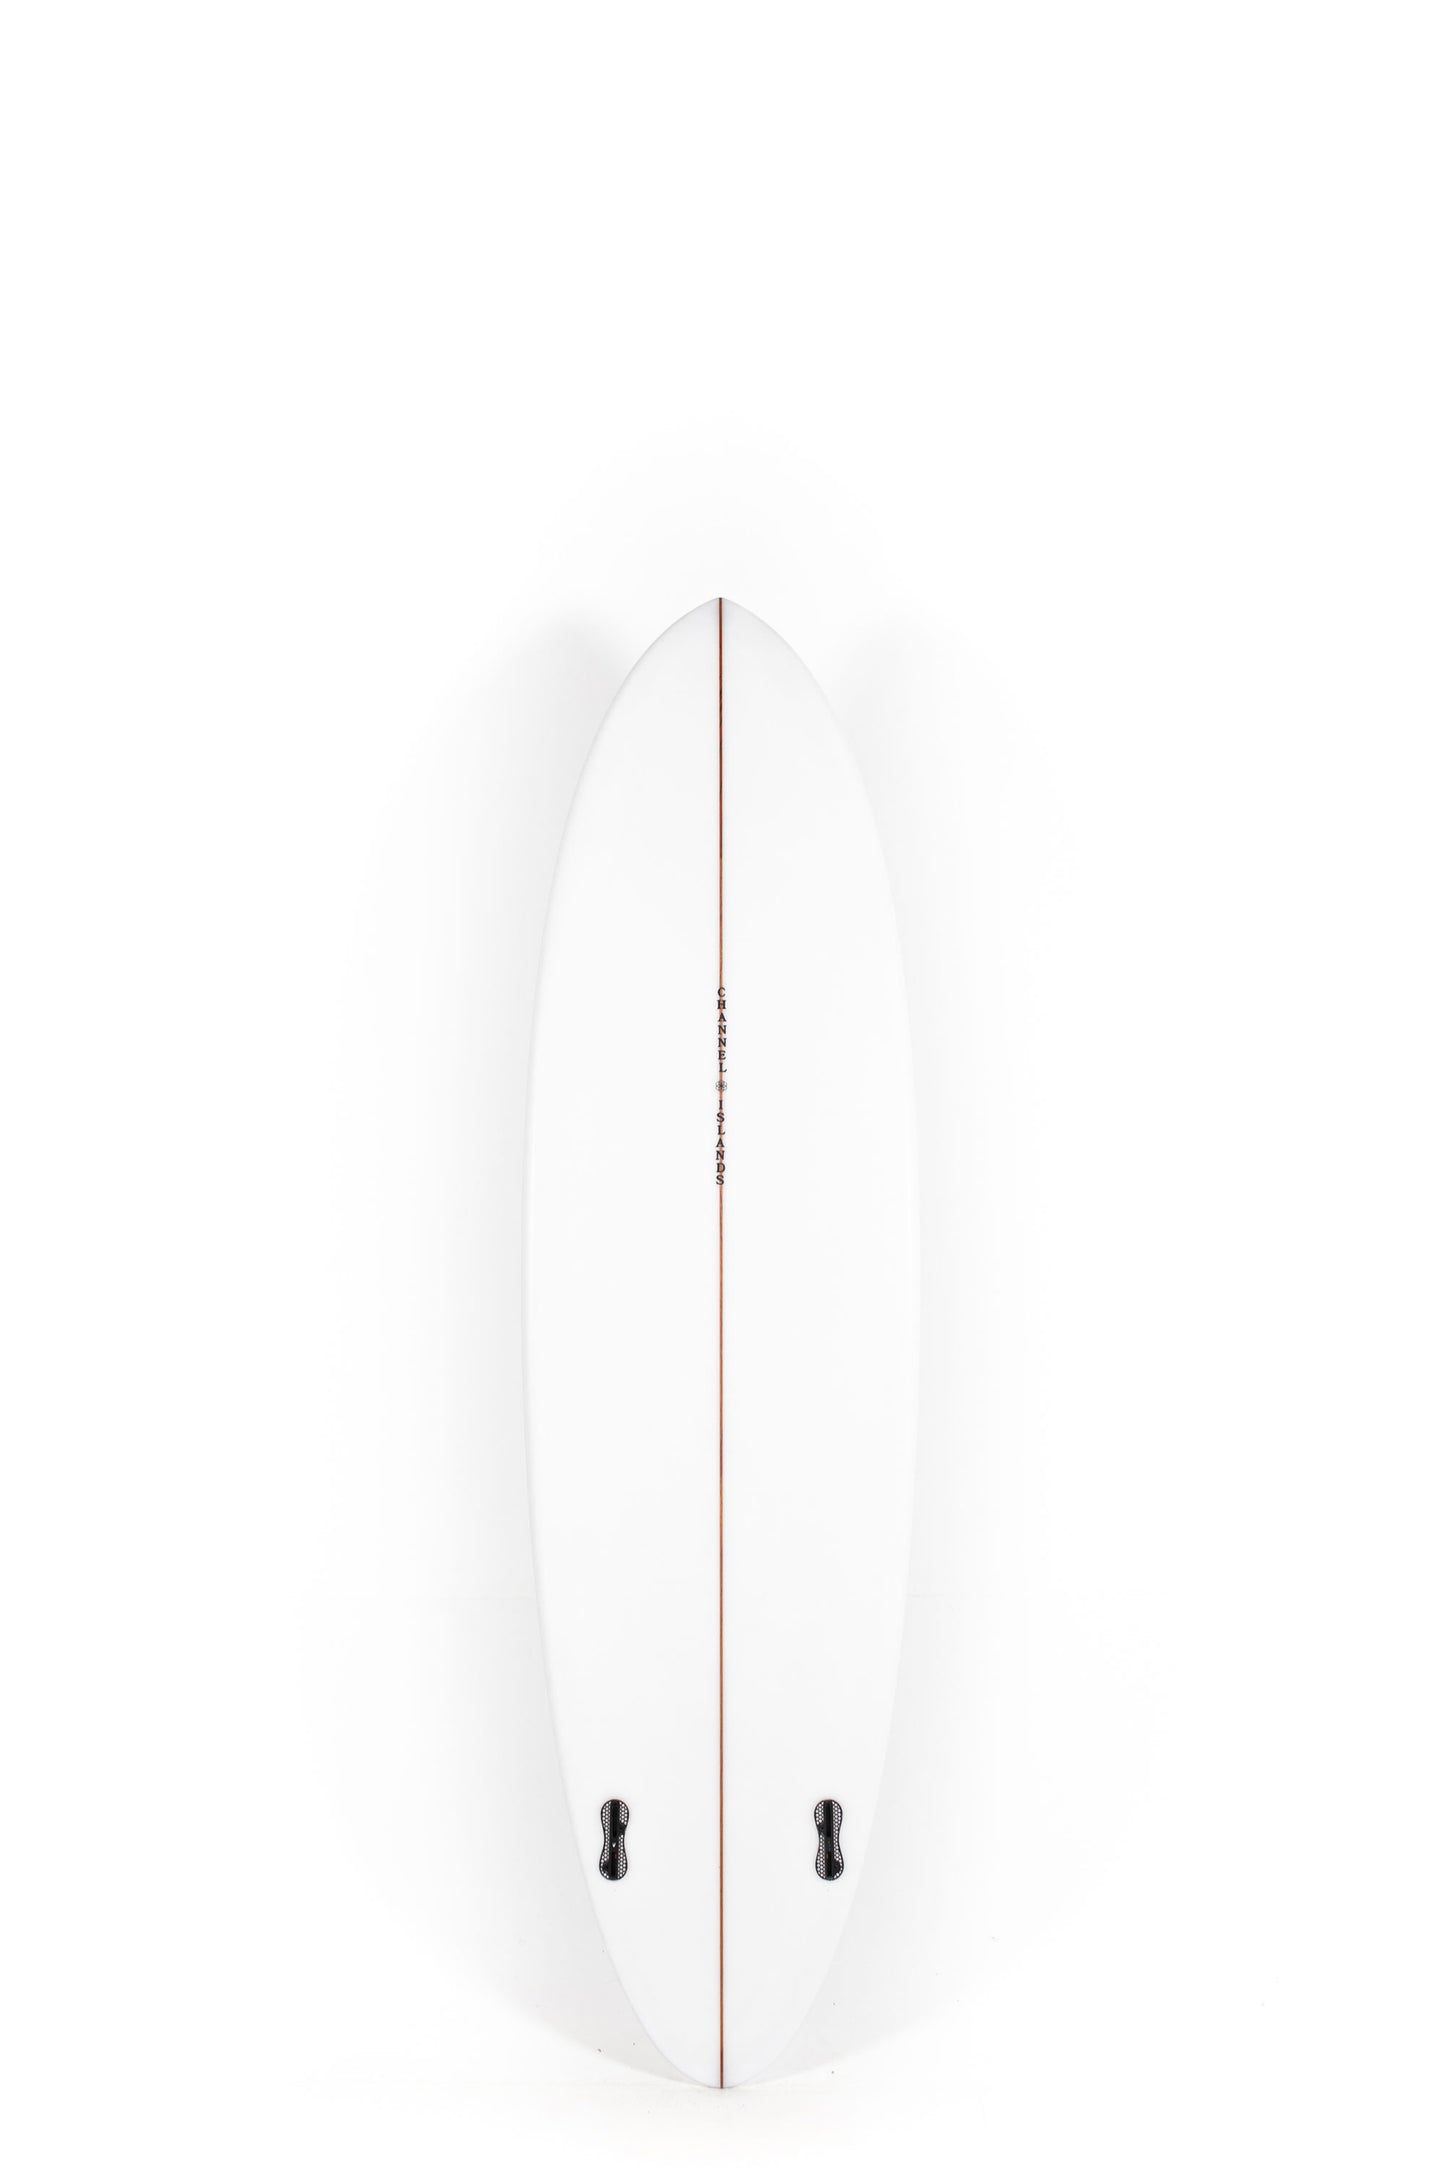 Pukas Surf Shop - Channel Islands - CI MID TWIN - 6'8" x 21 x 2 11/16 - 41,45L - CI27620